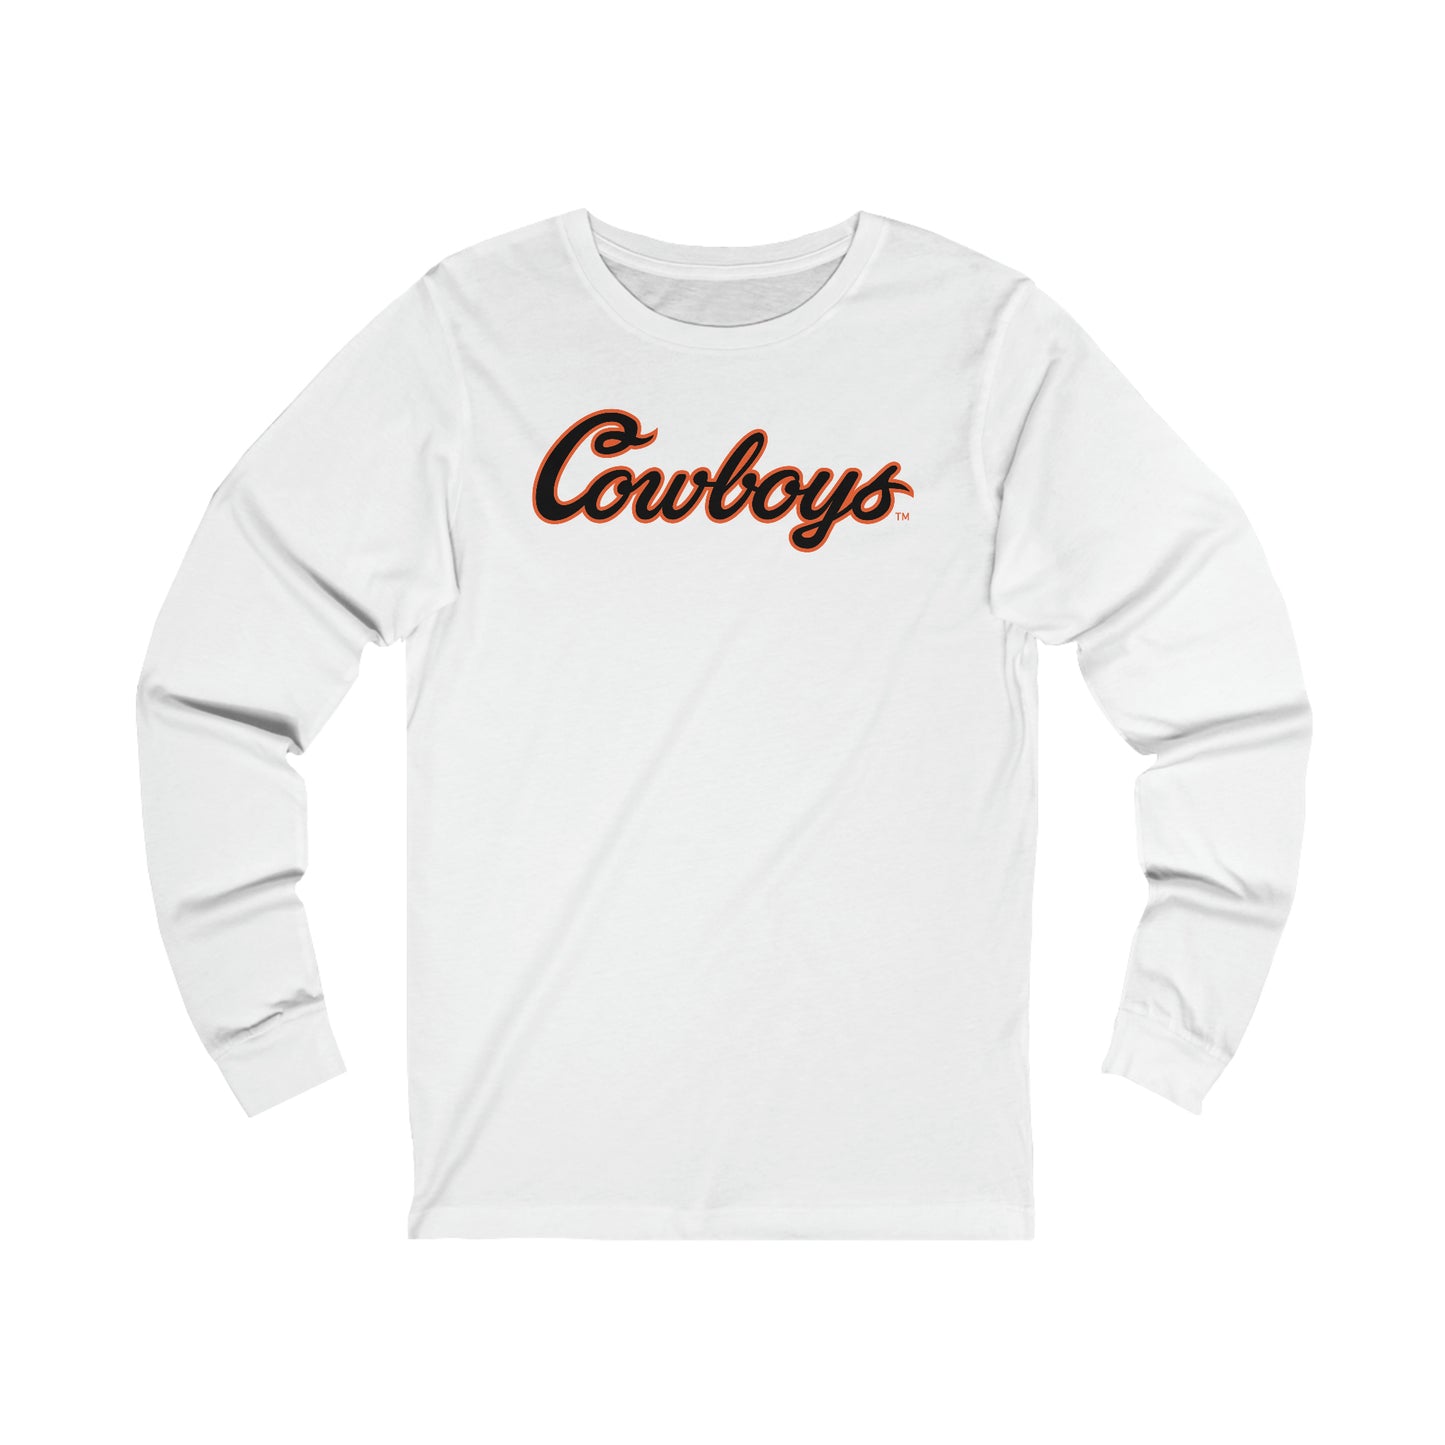 Brennan Presley #80 Cursive Cowboys Long Sleeve T-Shirt